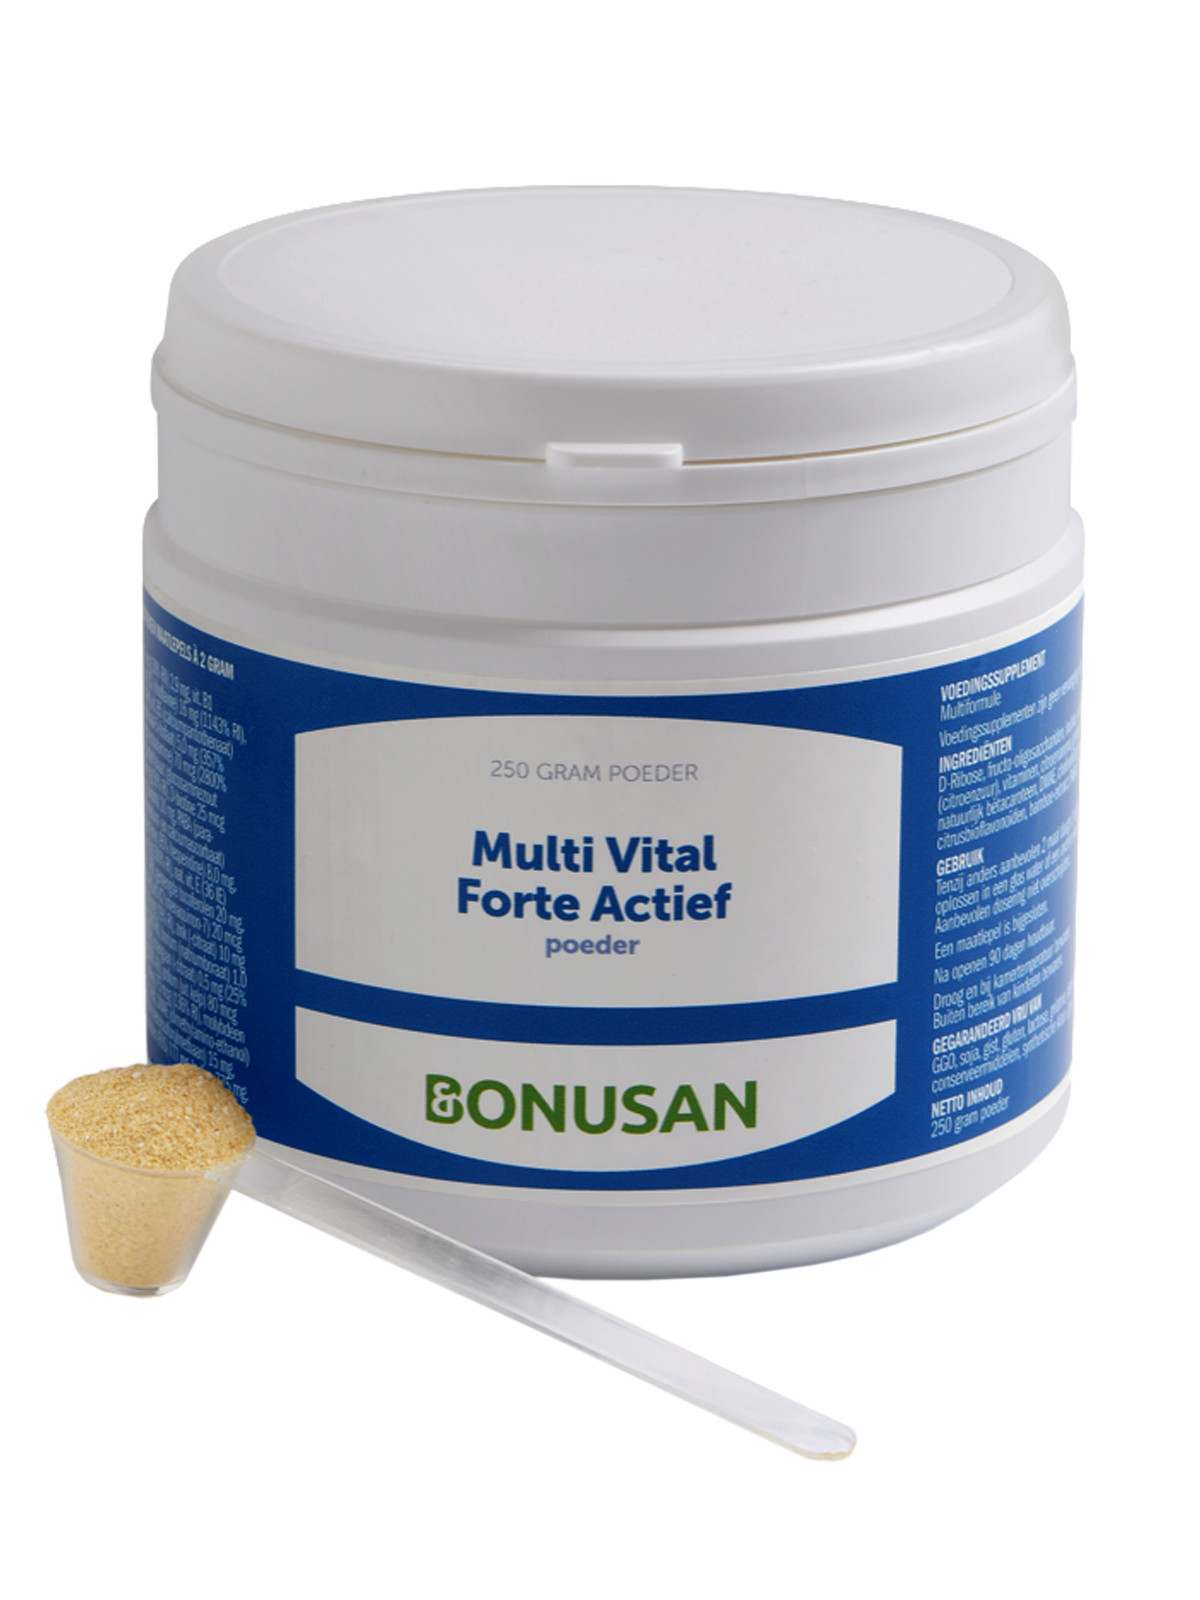 Multi Vital Forte Actief poeder